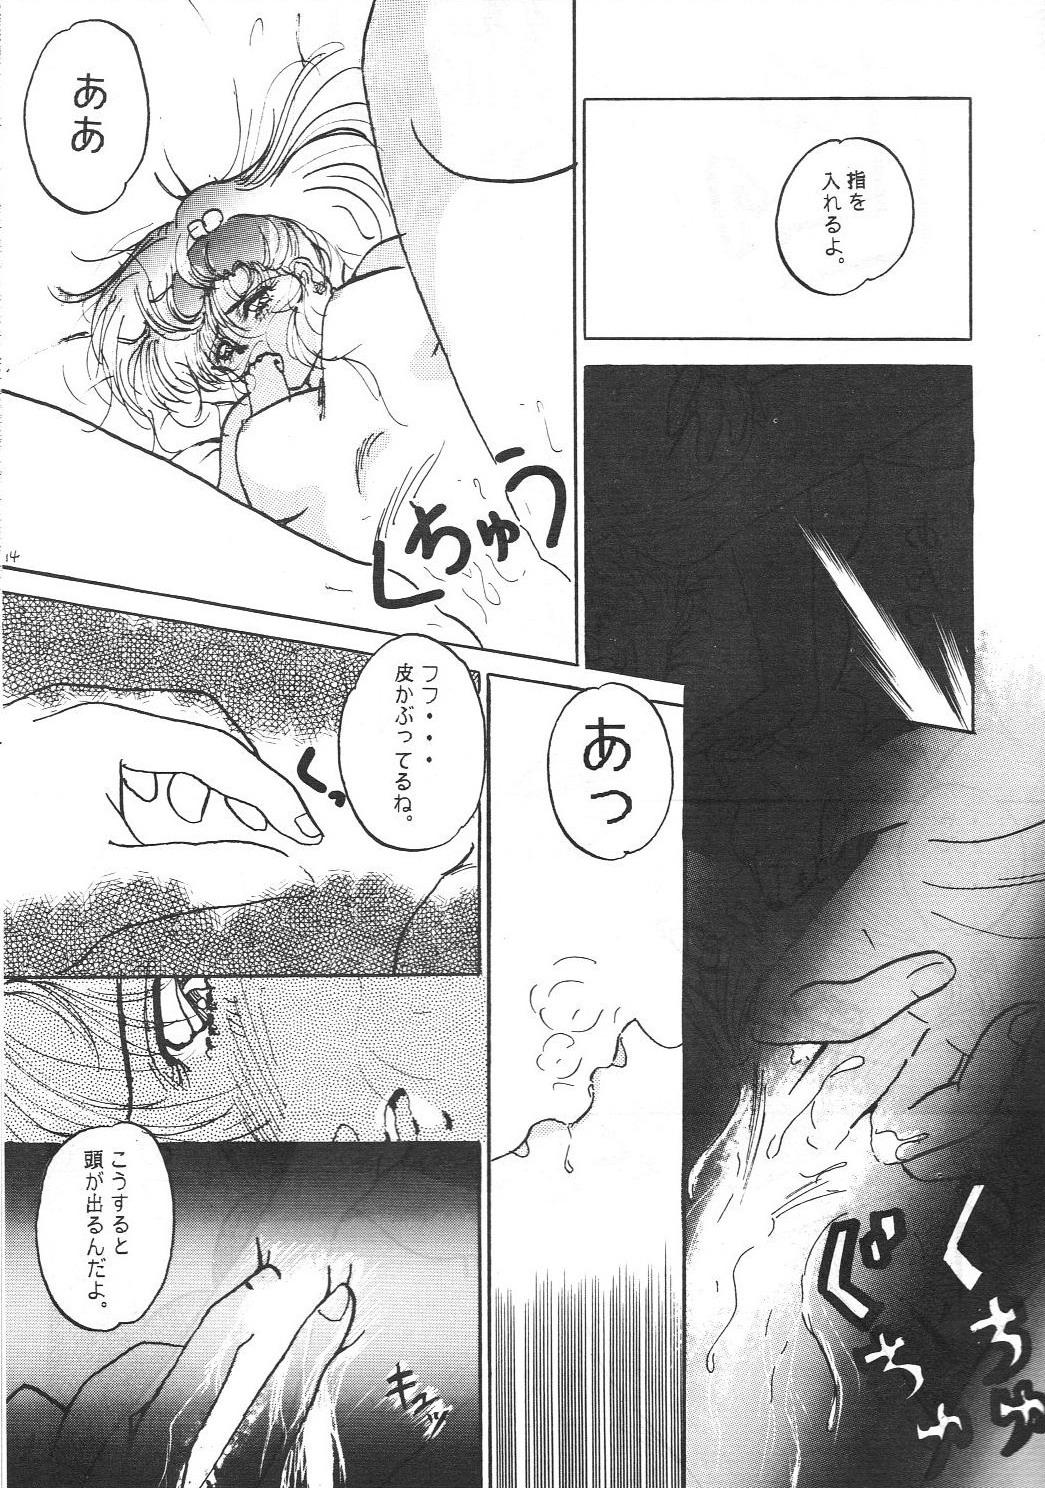 Squirt HOHETO 8 - Sailor moon Ah my goddess Tenchi muyo Ghost sweeper mikami Tattoos - Page 13